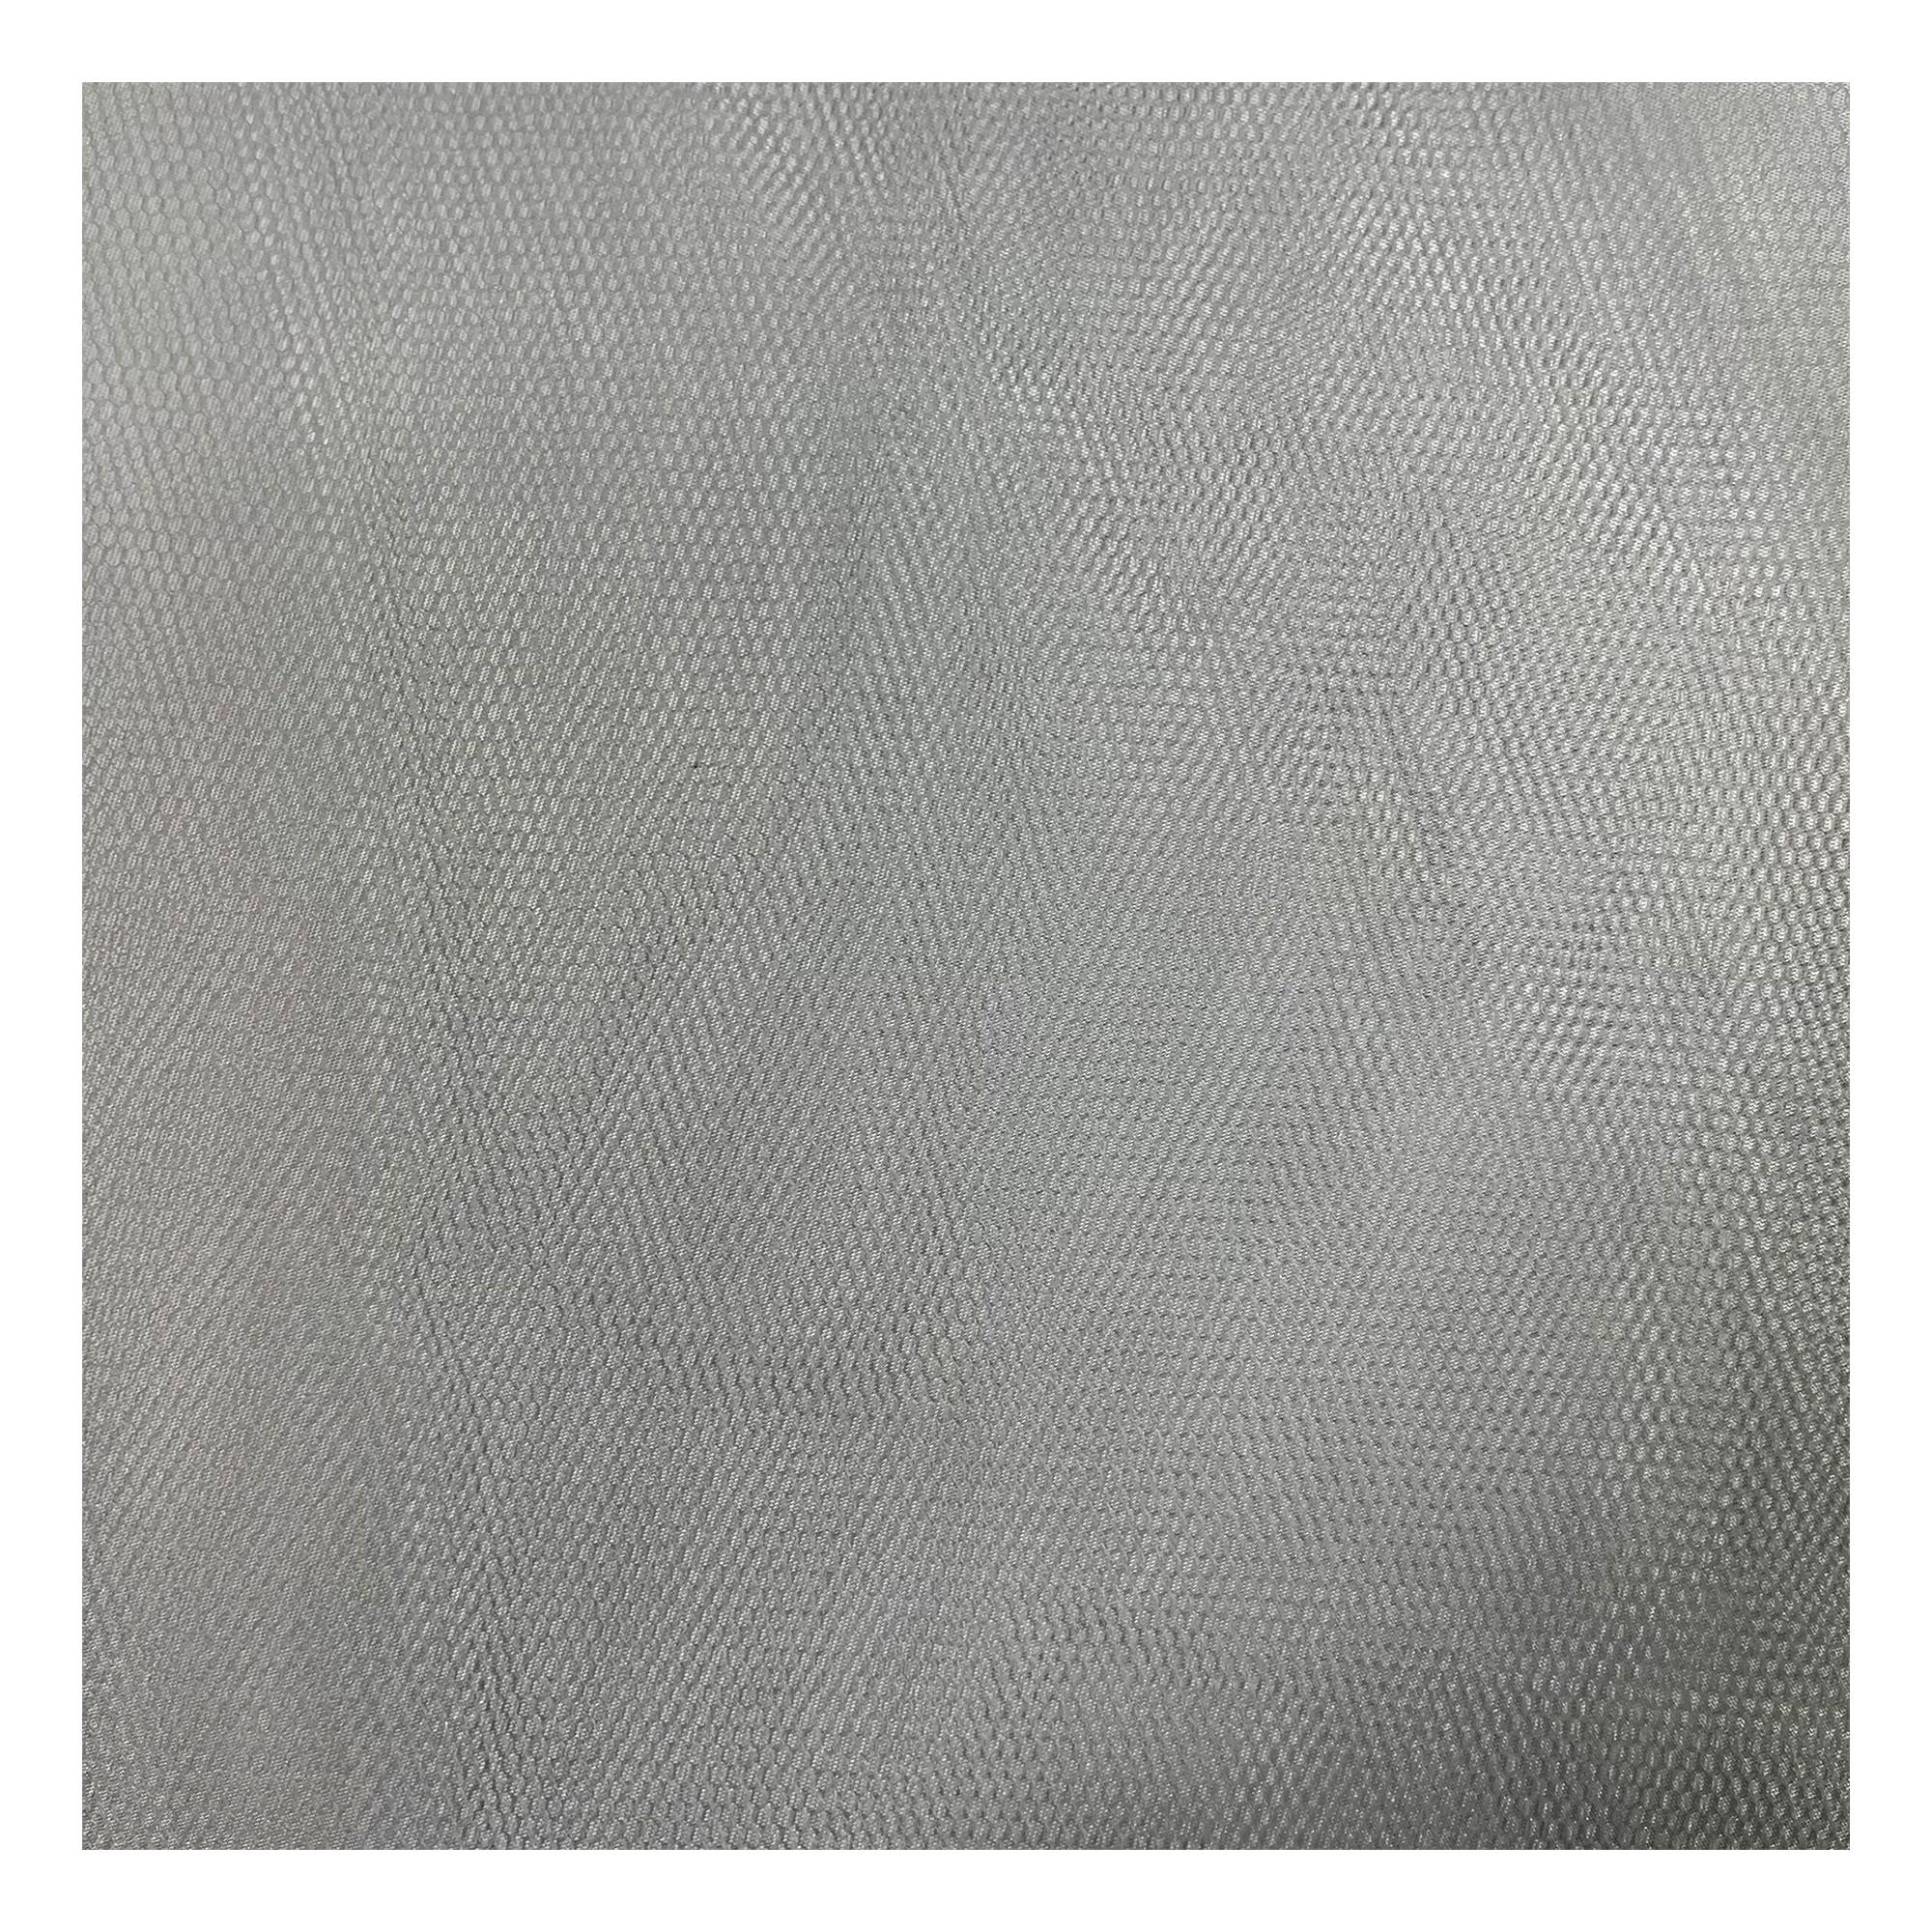 Silver Grey Nylon Dress Net Fabric by the Metre | Hobbycraft